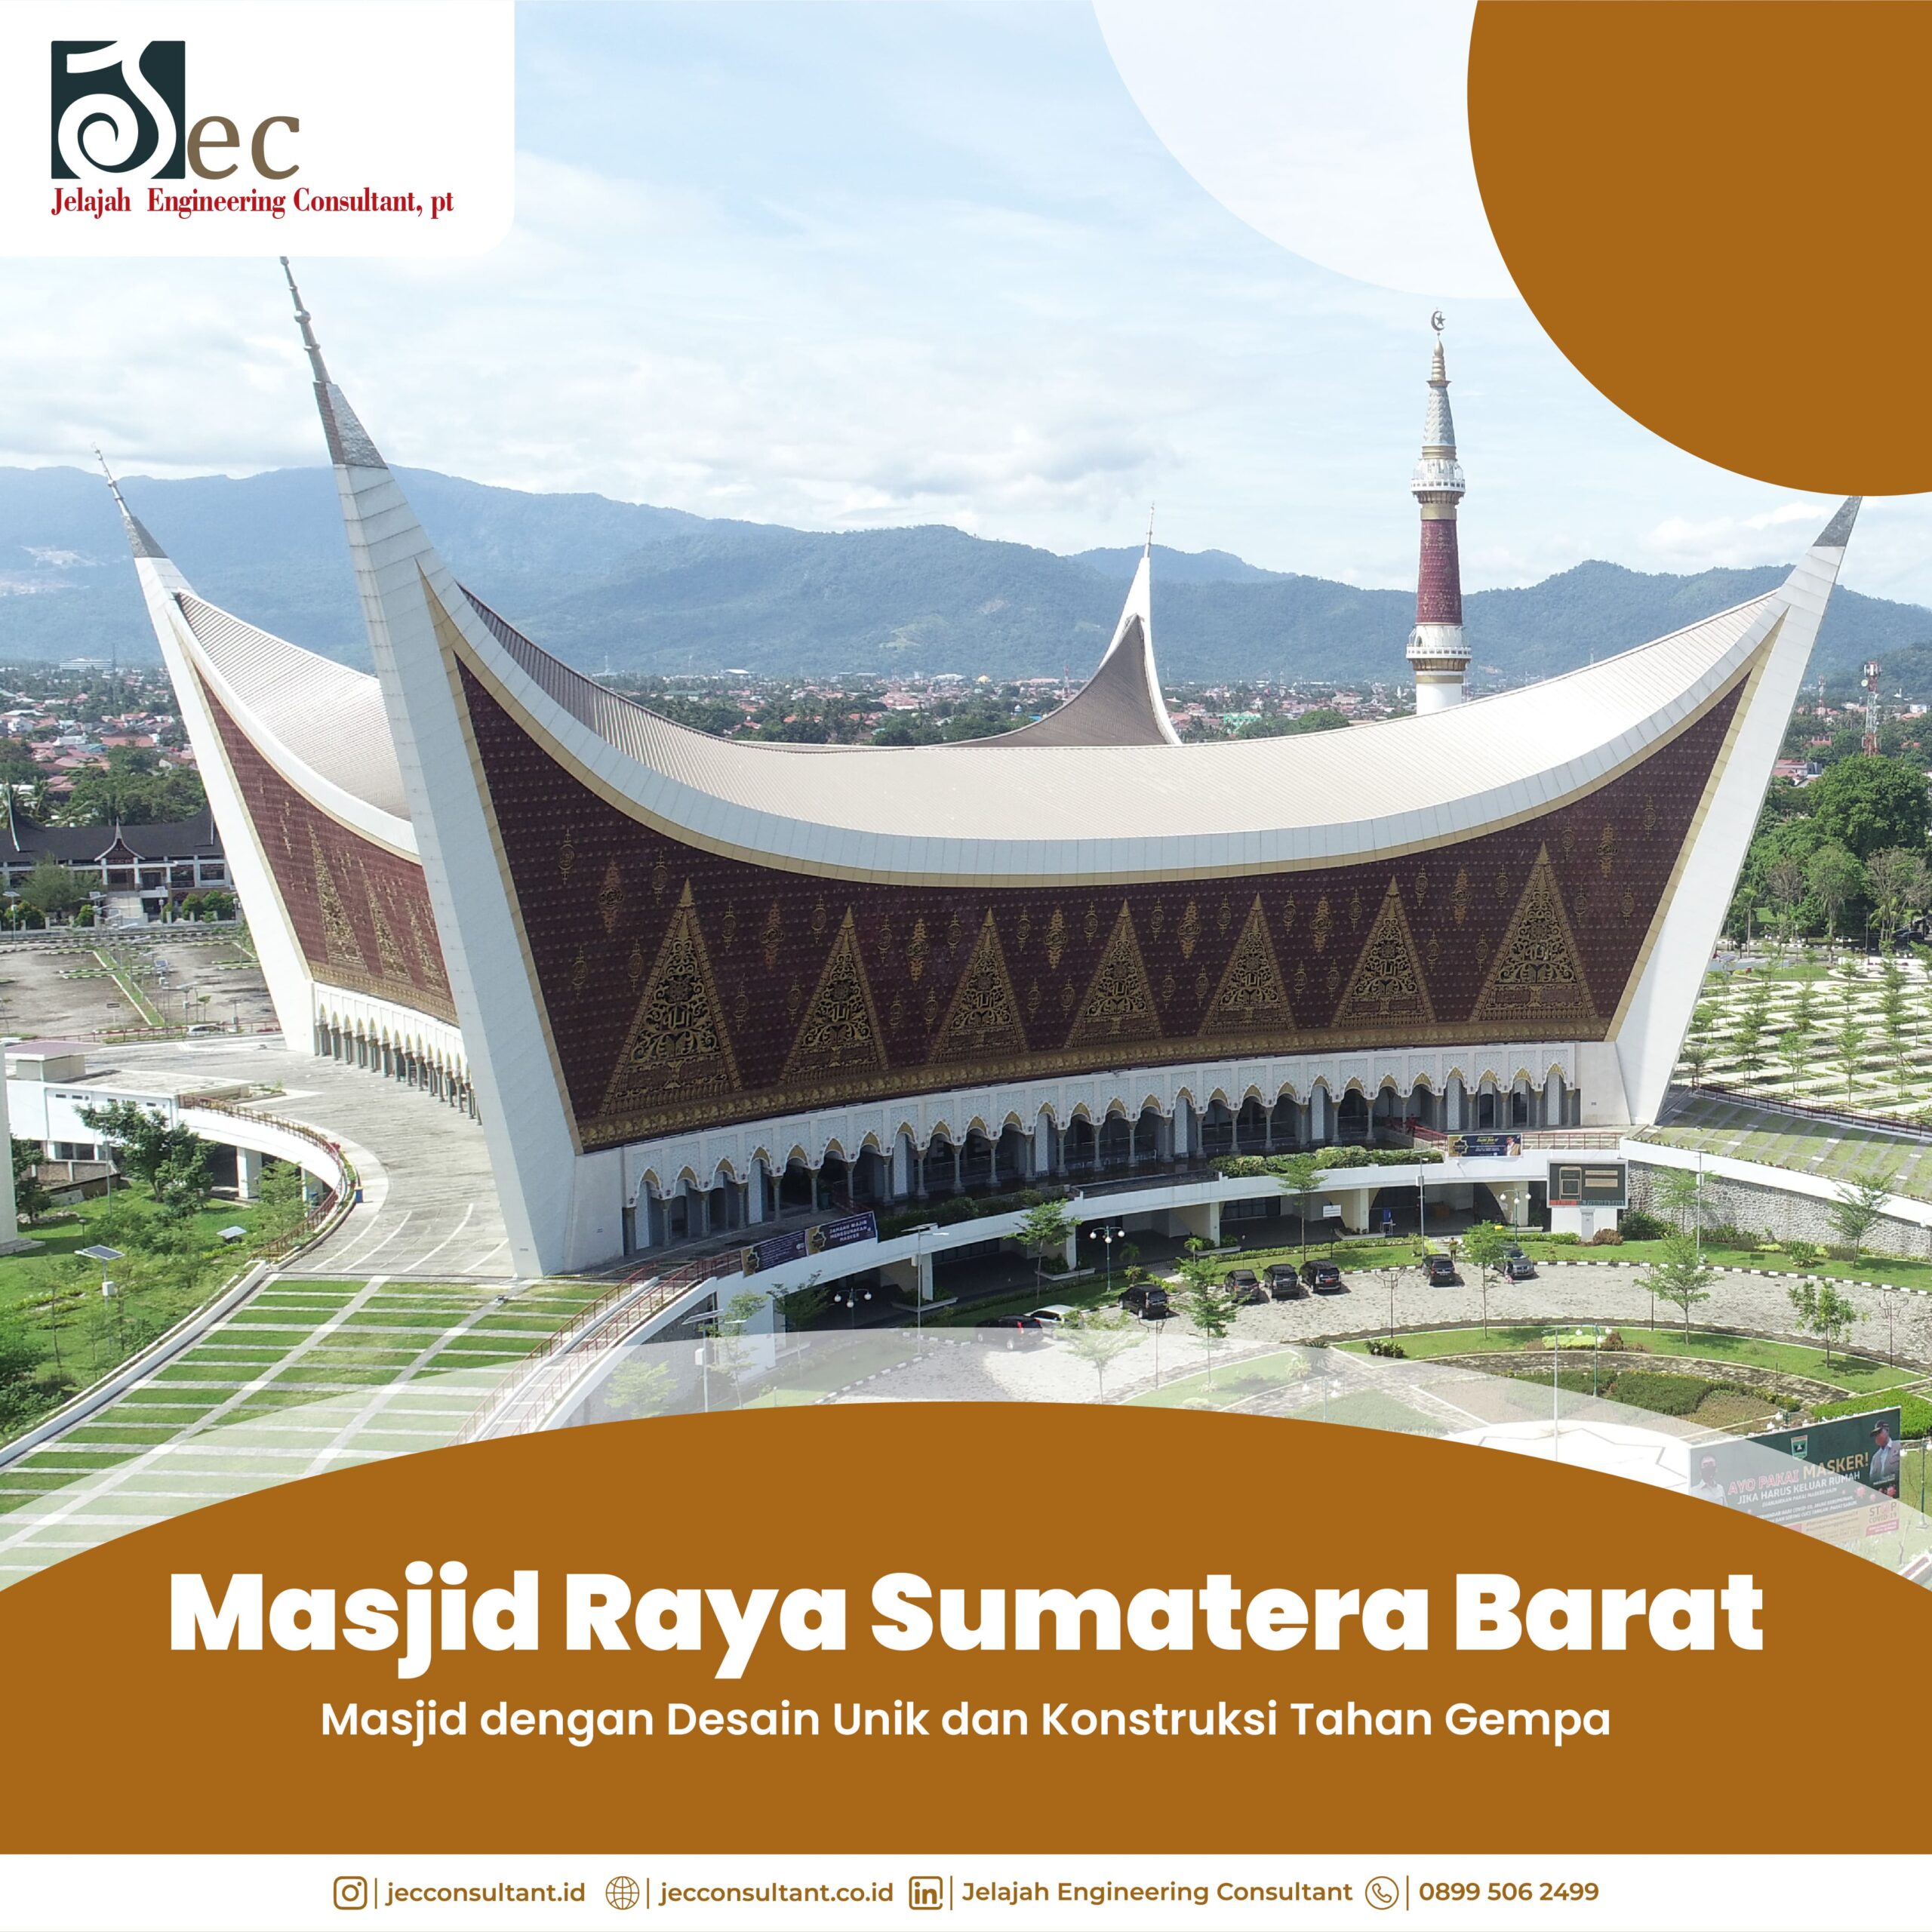 Masjid Raya Sumatera Barat, Masjid dengan Desain Unik dan Kontruksi Tahan Gempa